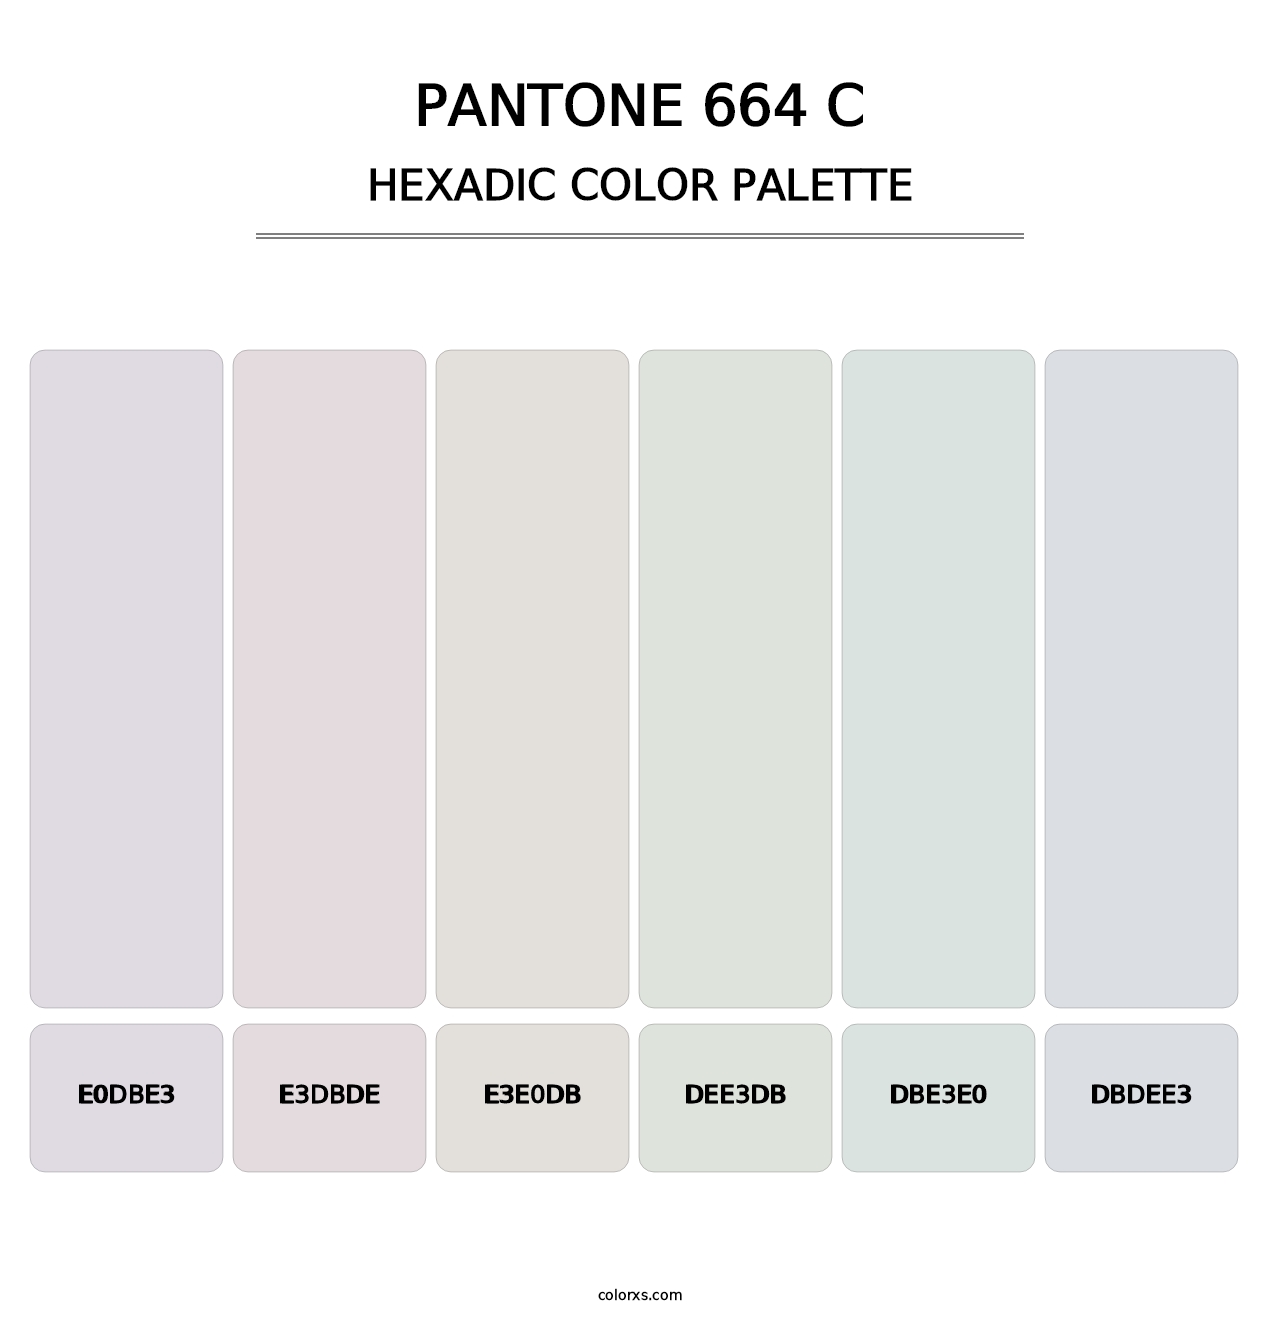 PANTONE 664 C - Hexadic Color Palette